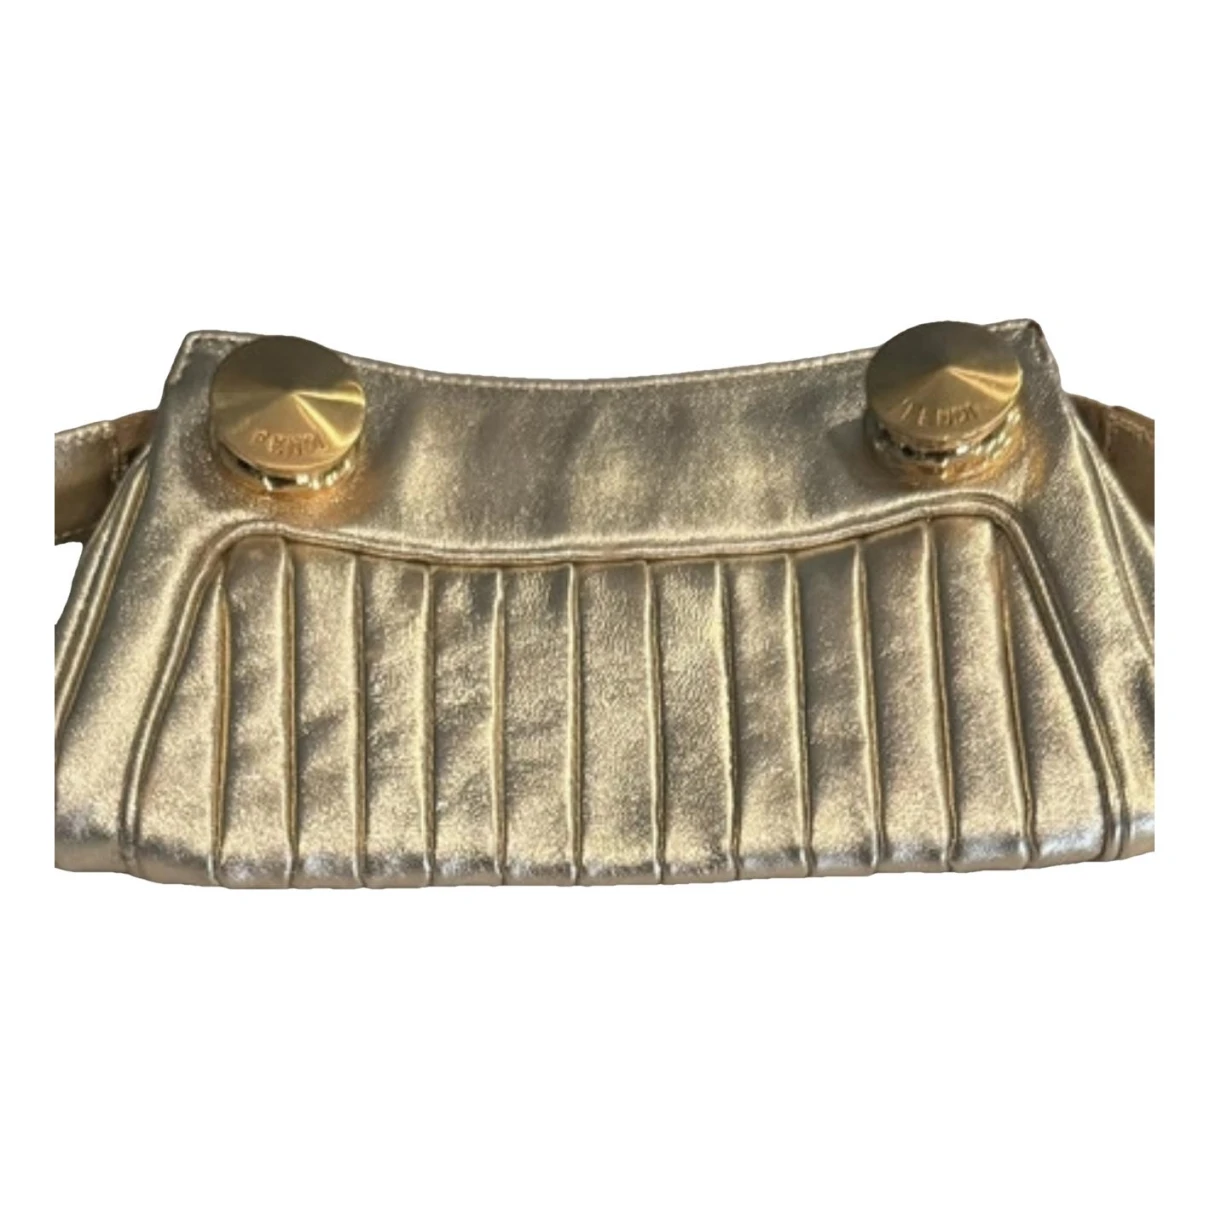 Pre-owned Fendi Leather Handbag In Gold